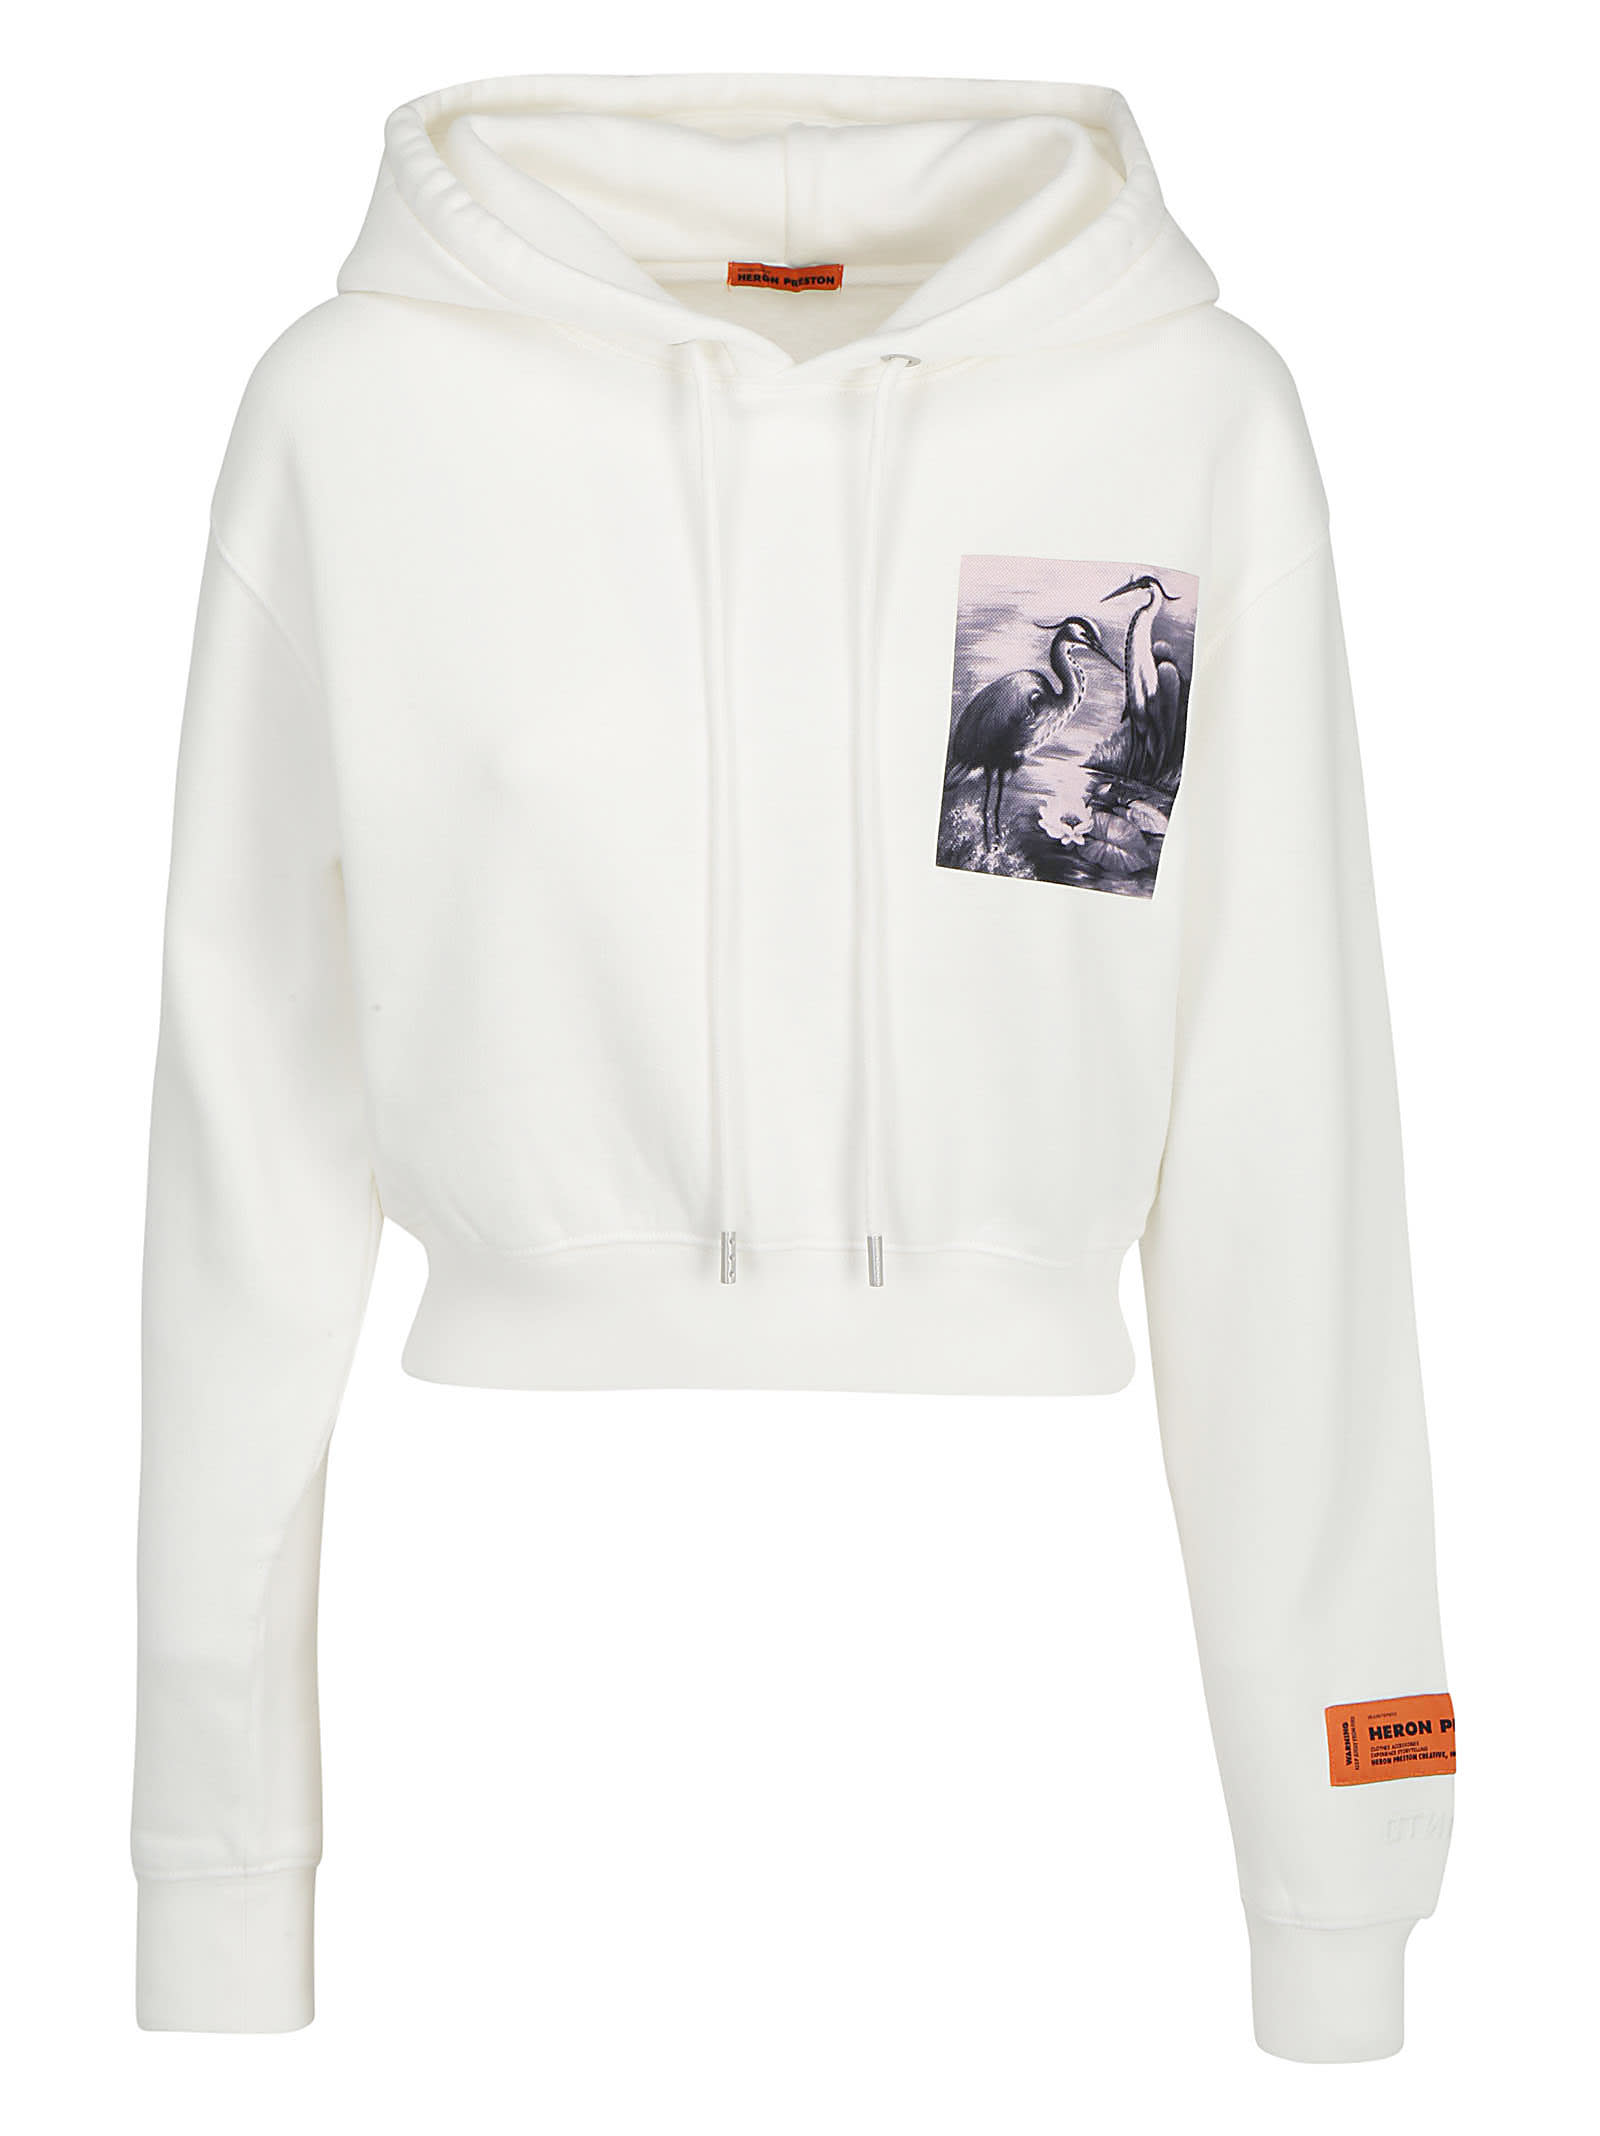 heron preston hoodie price